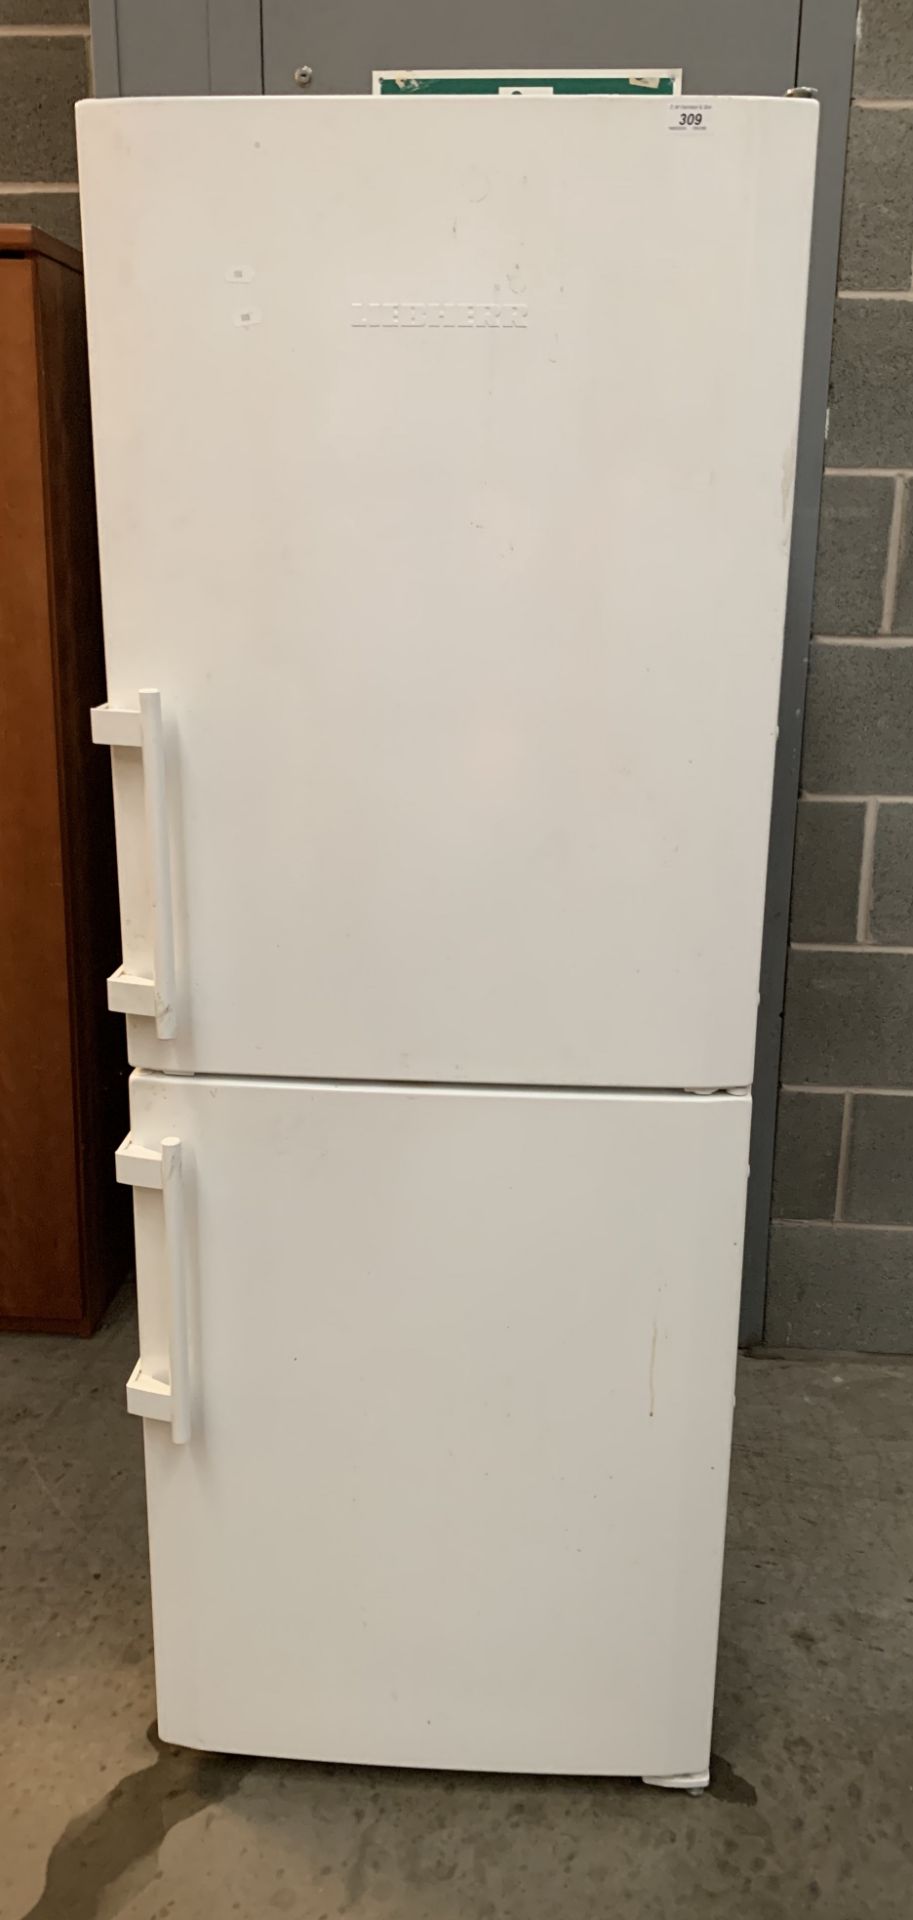 A Liebher upright fridge/freezer